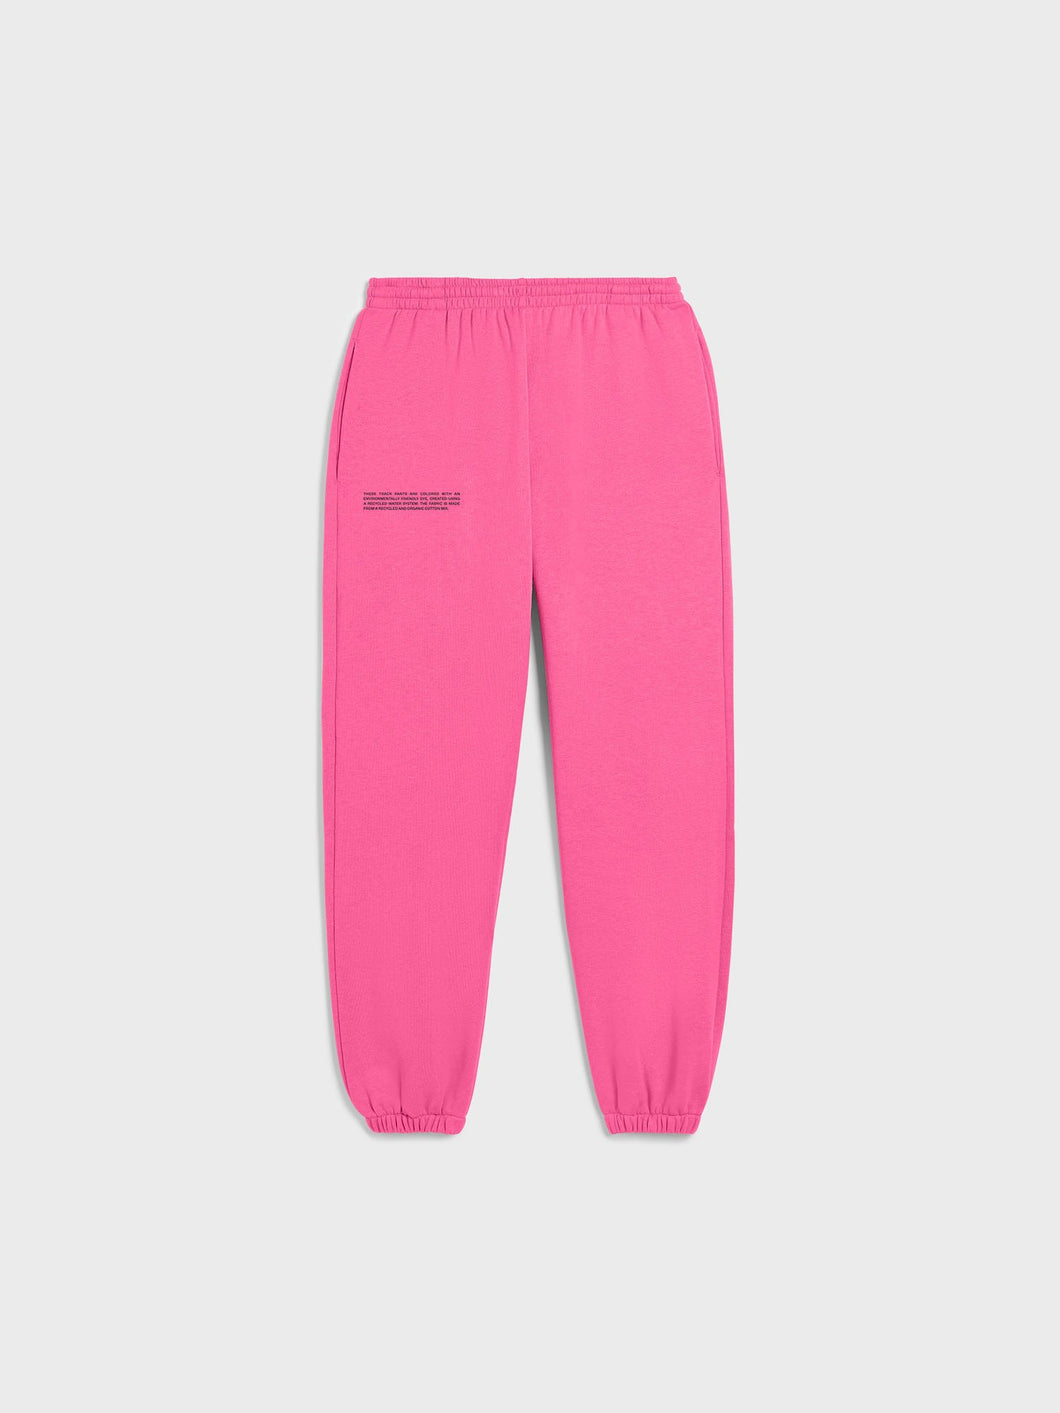 Flamingo Pink Track Pants